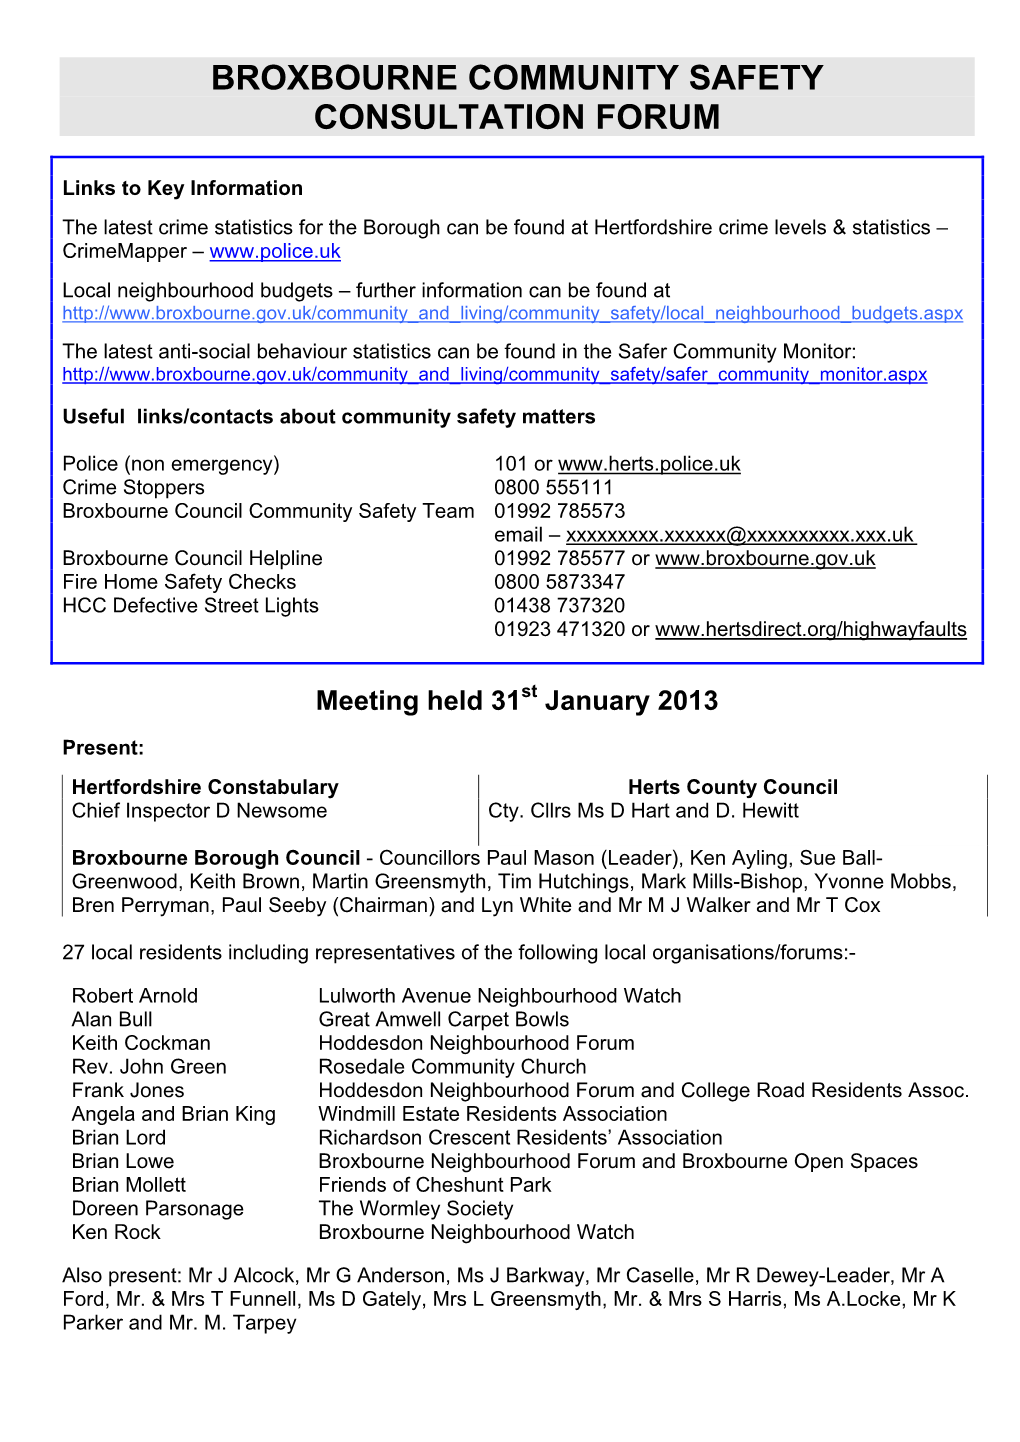 Broxbourne Community Safety Consultation Forum